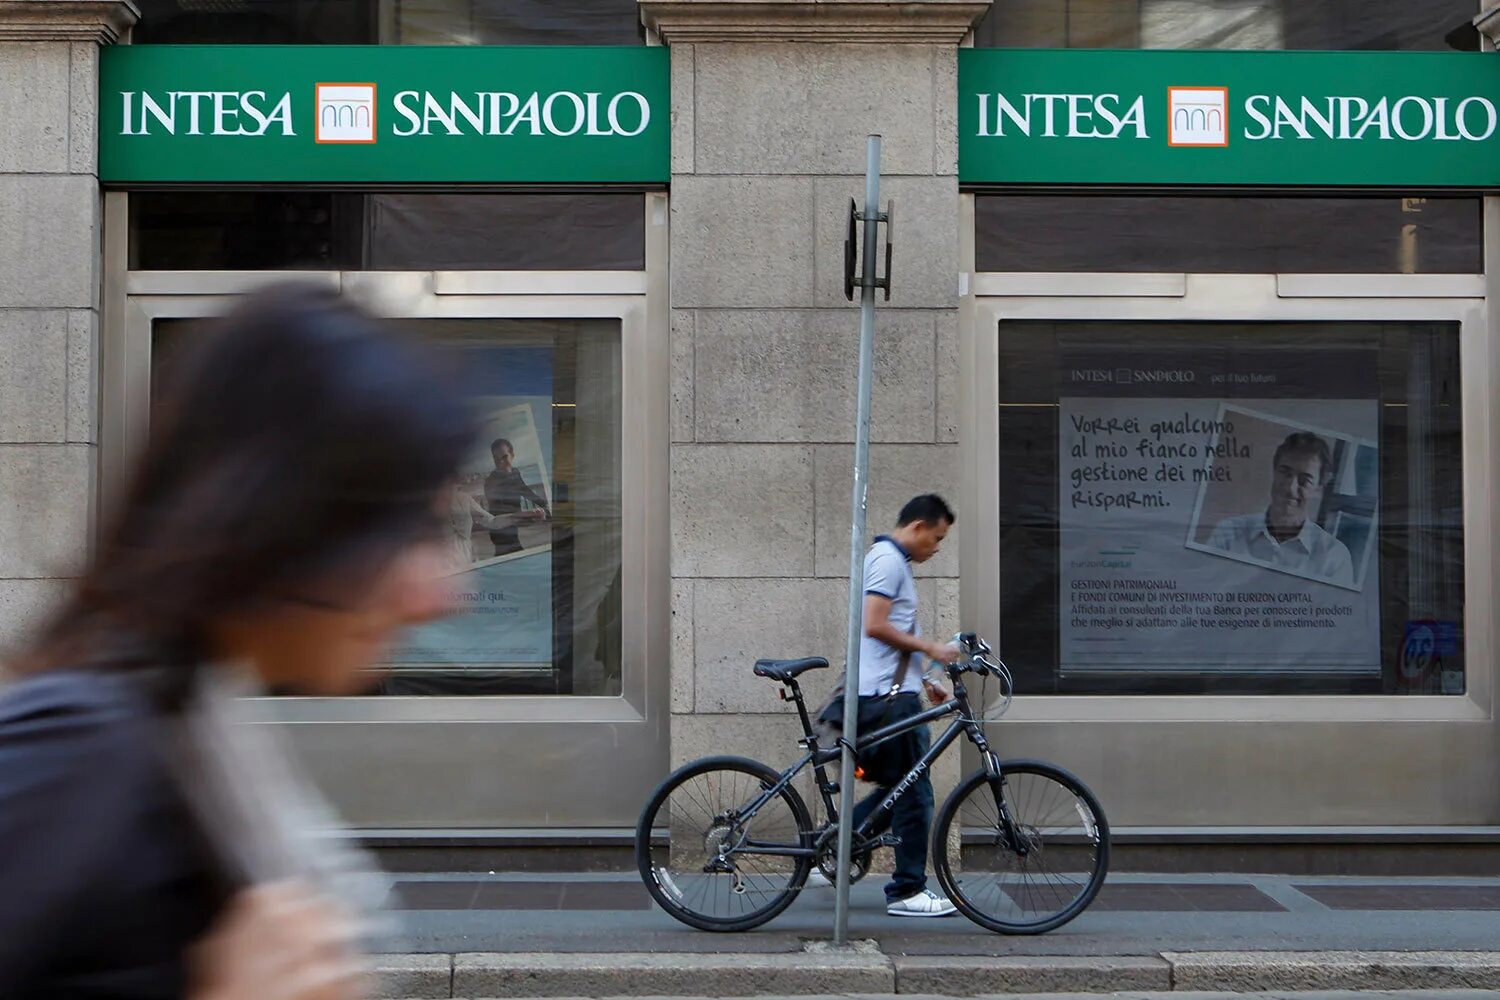 Intesa Bank Italy. Интеза Санпаоло. Banca Intesa Sanpaolo приложение. Банк Интеза в Италии фото.